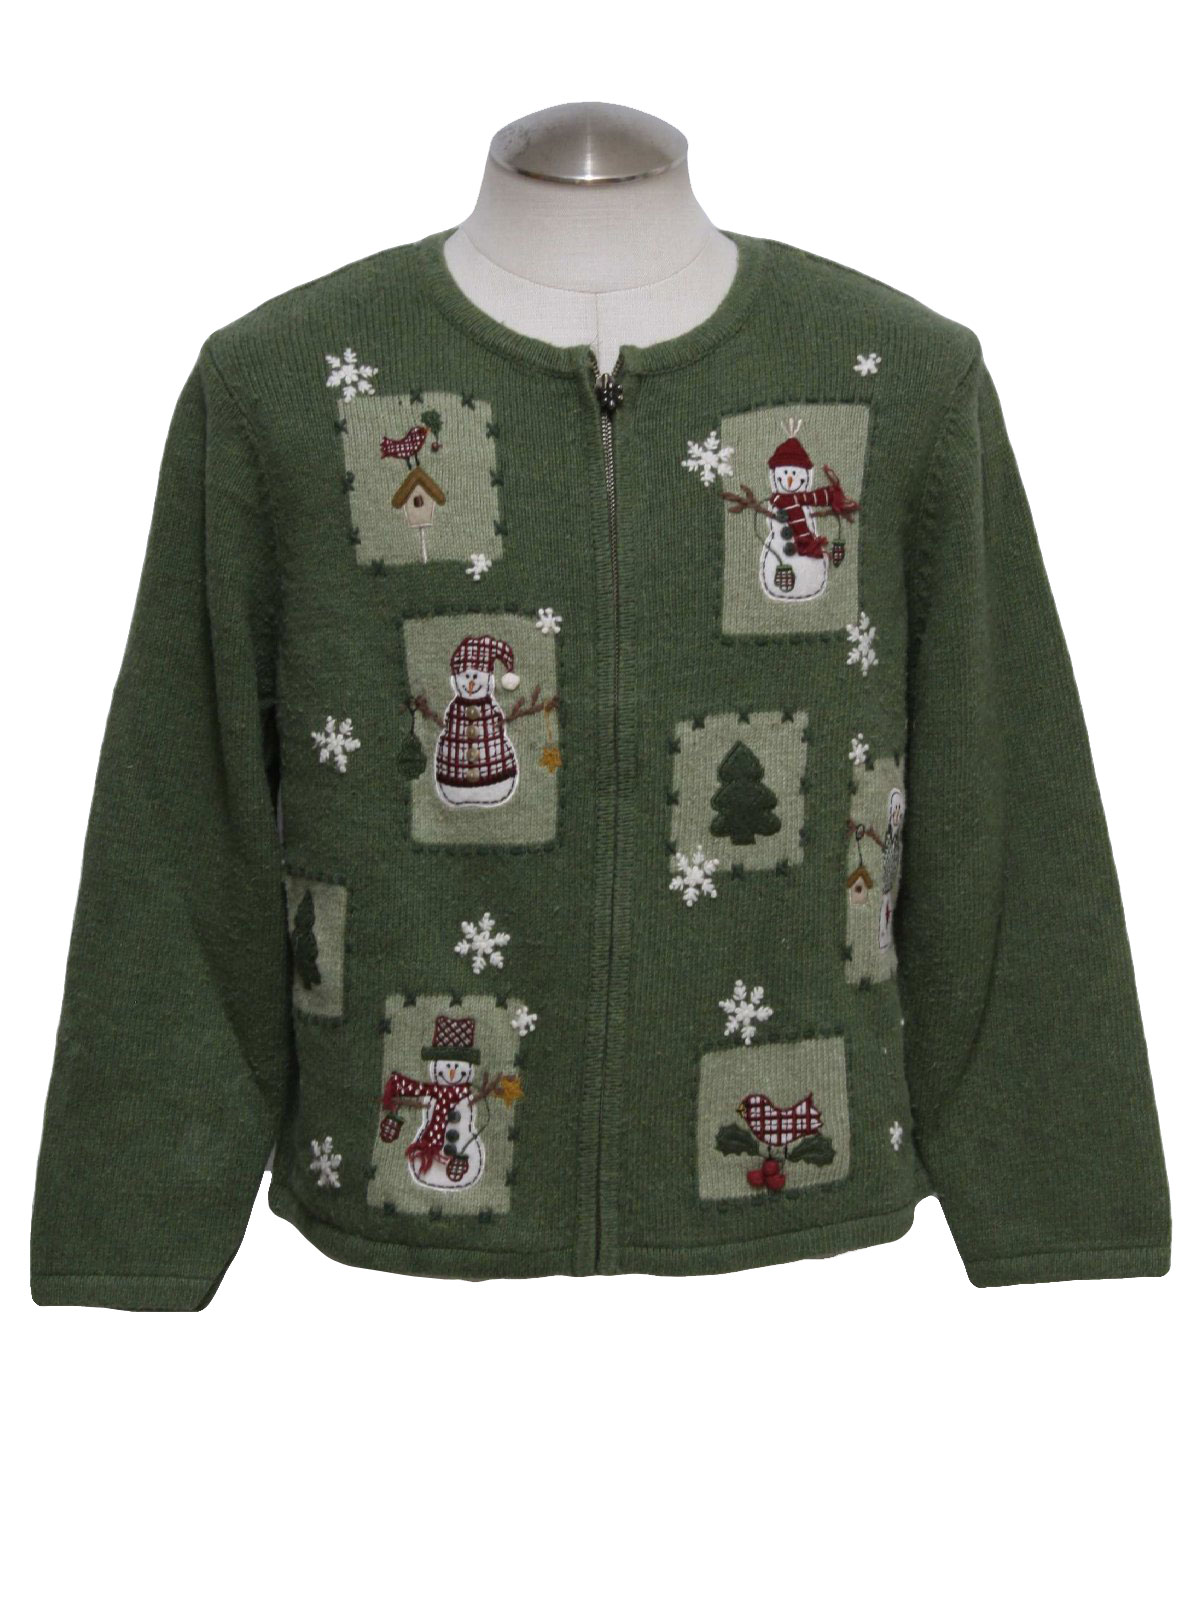 Womens Ugly Christmas Sweater : -Croft & Barrow- Womens green ...